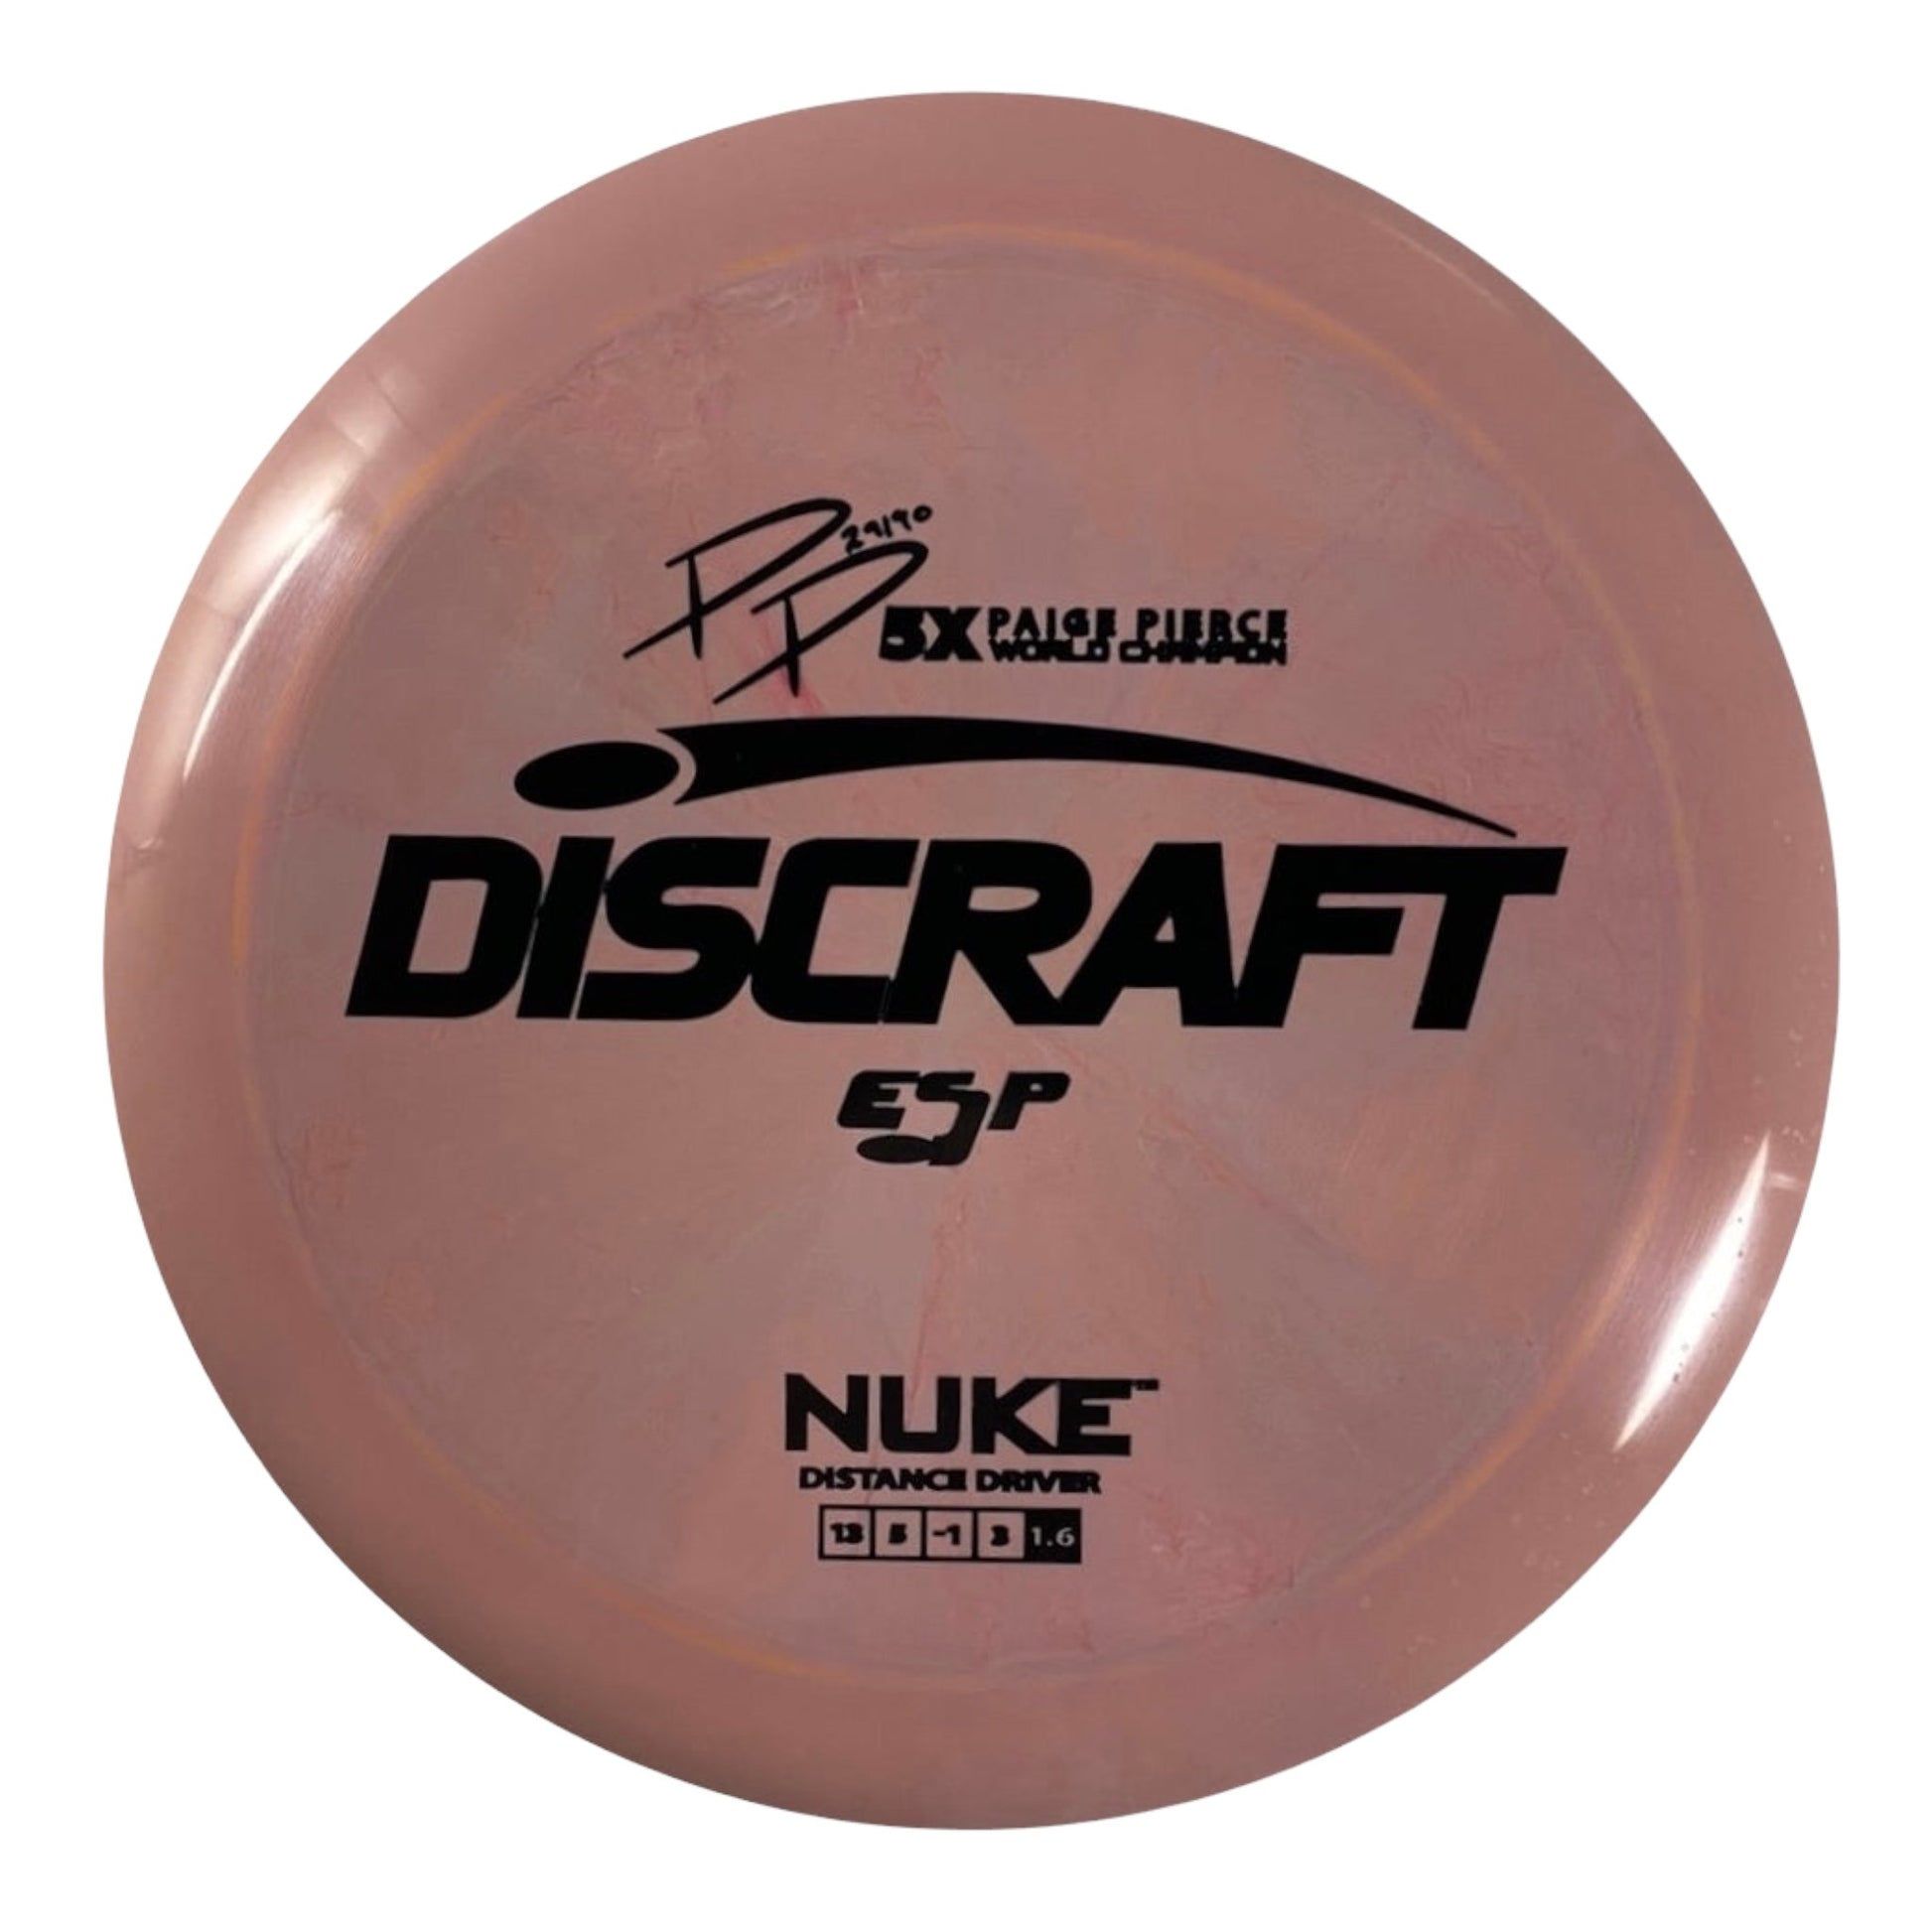 Discraft Nuke | ESP | Pink/Black 173g (Paige Pierce) Disc Golf